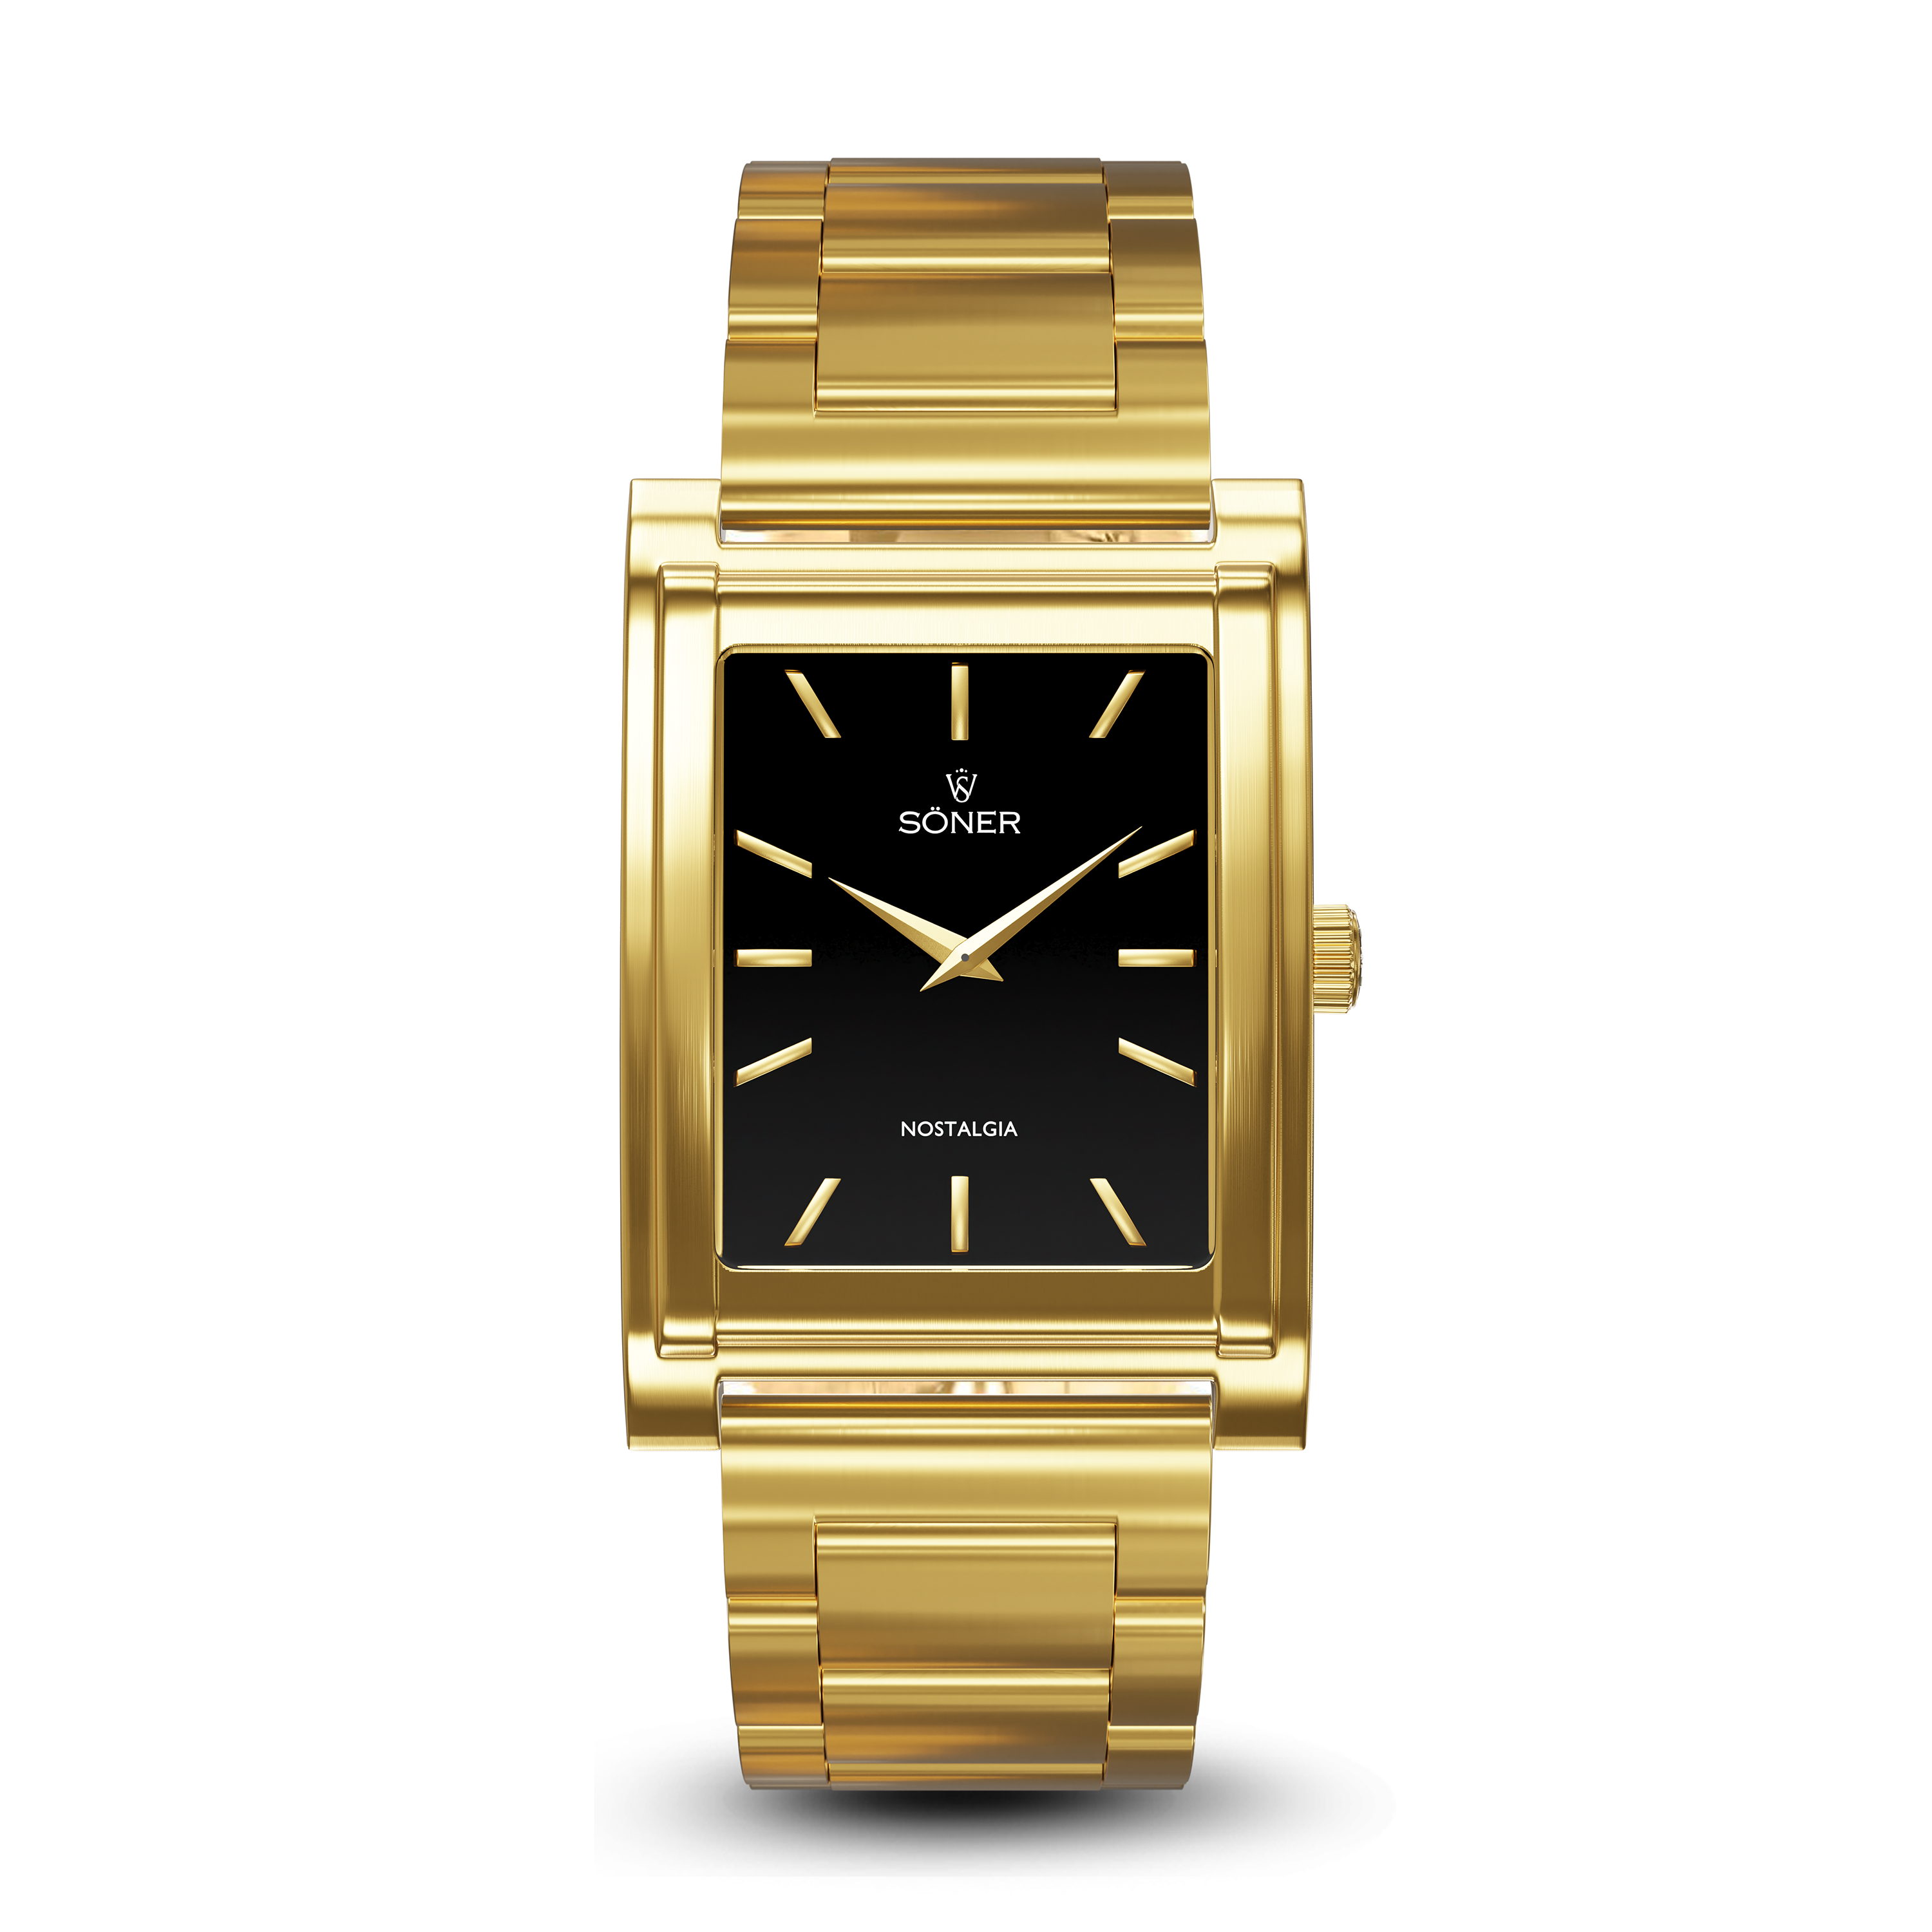 Square watch, Nostalgia Monaco - steel gold bracelet front view